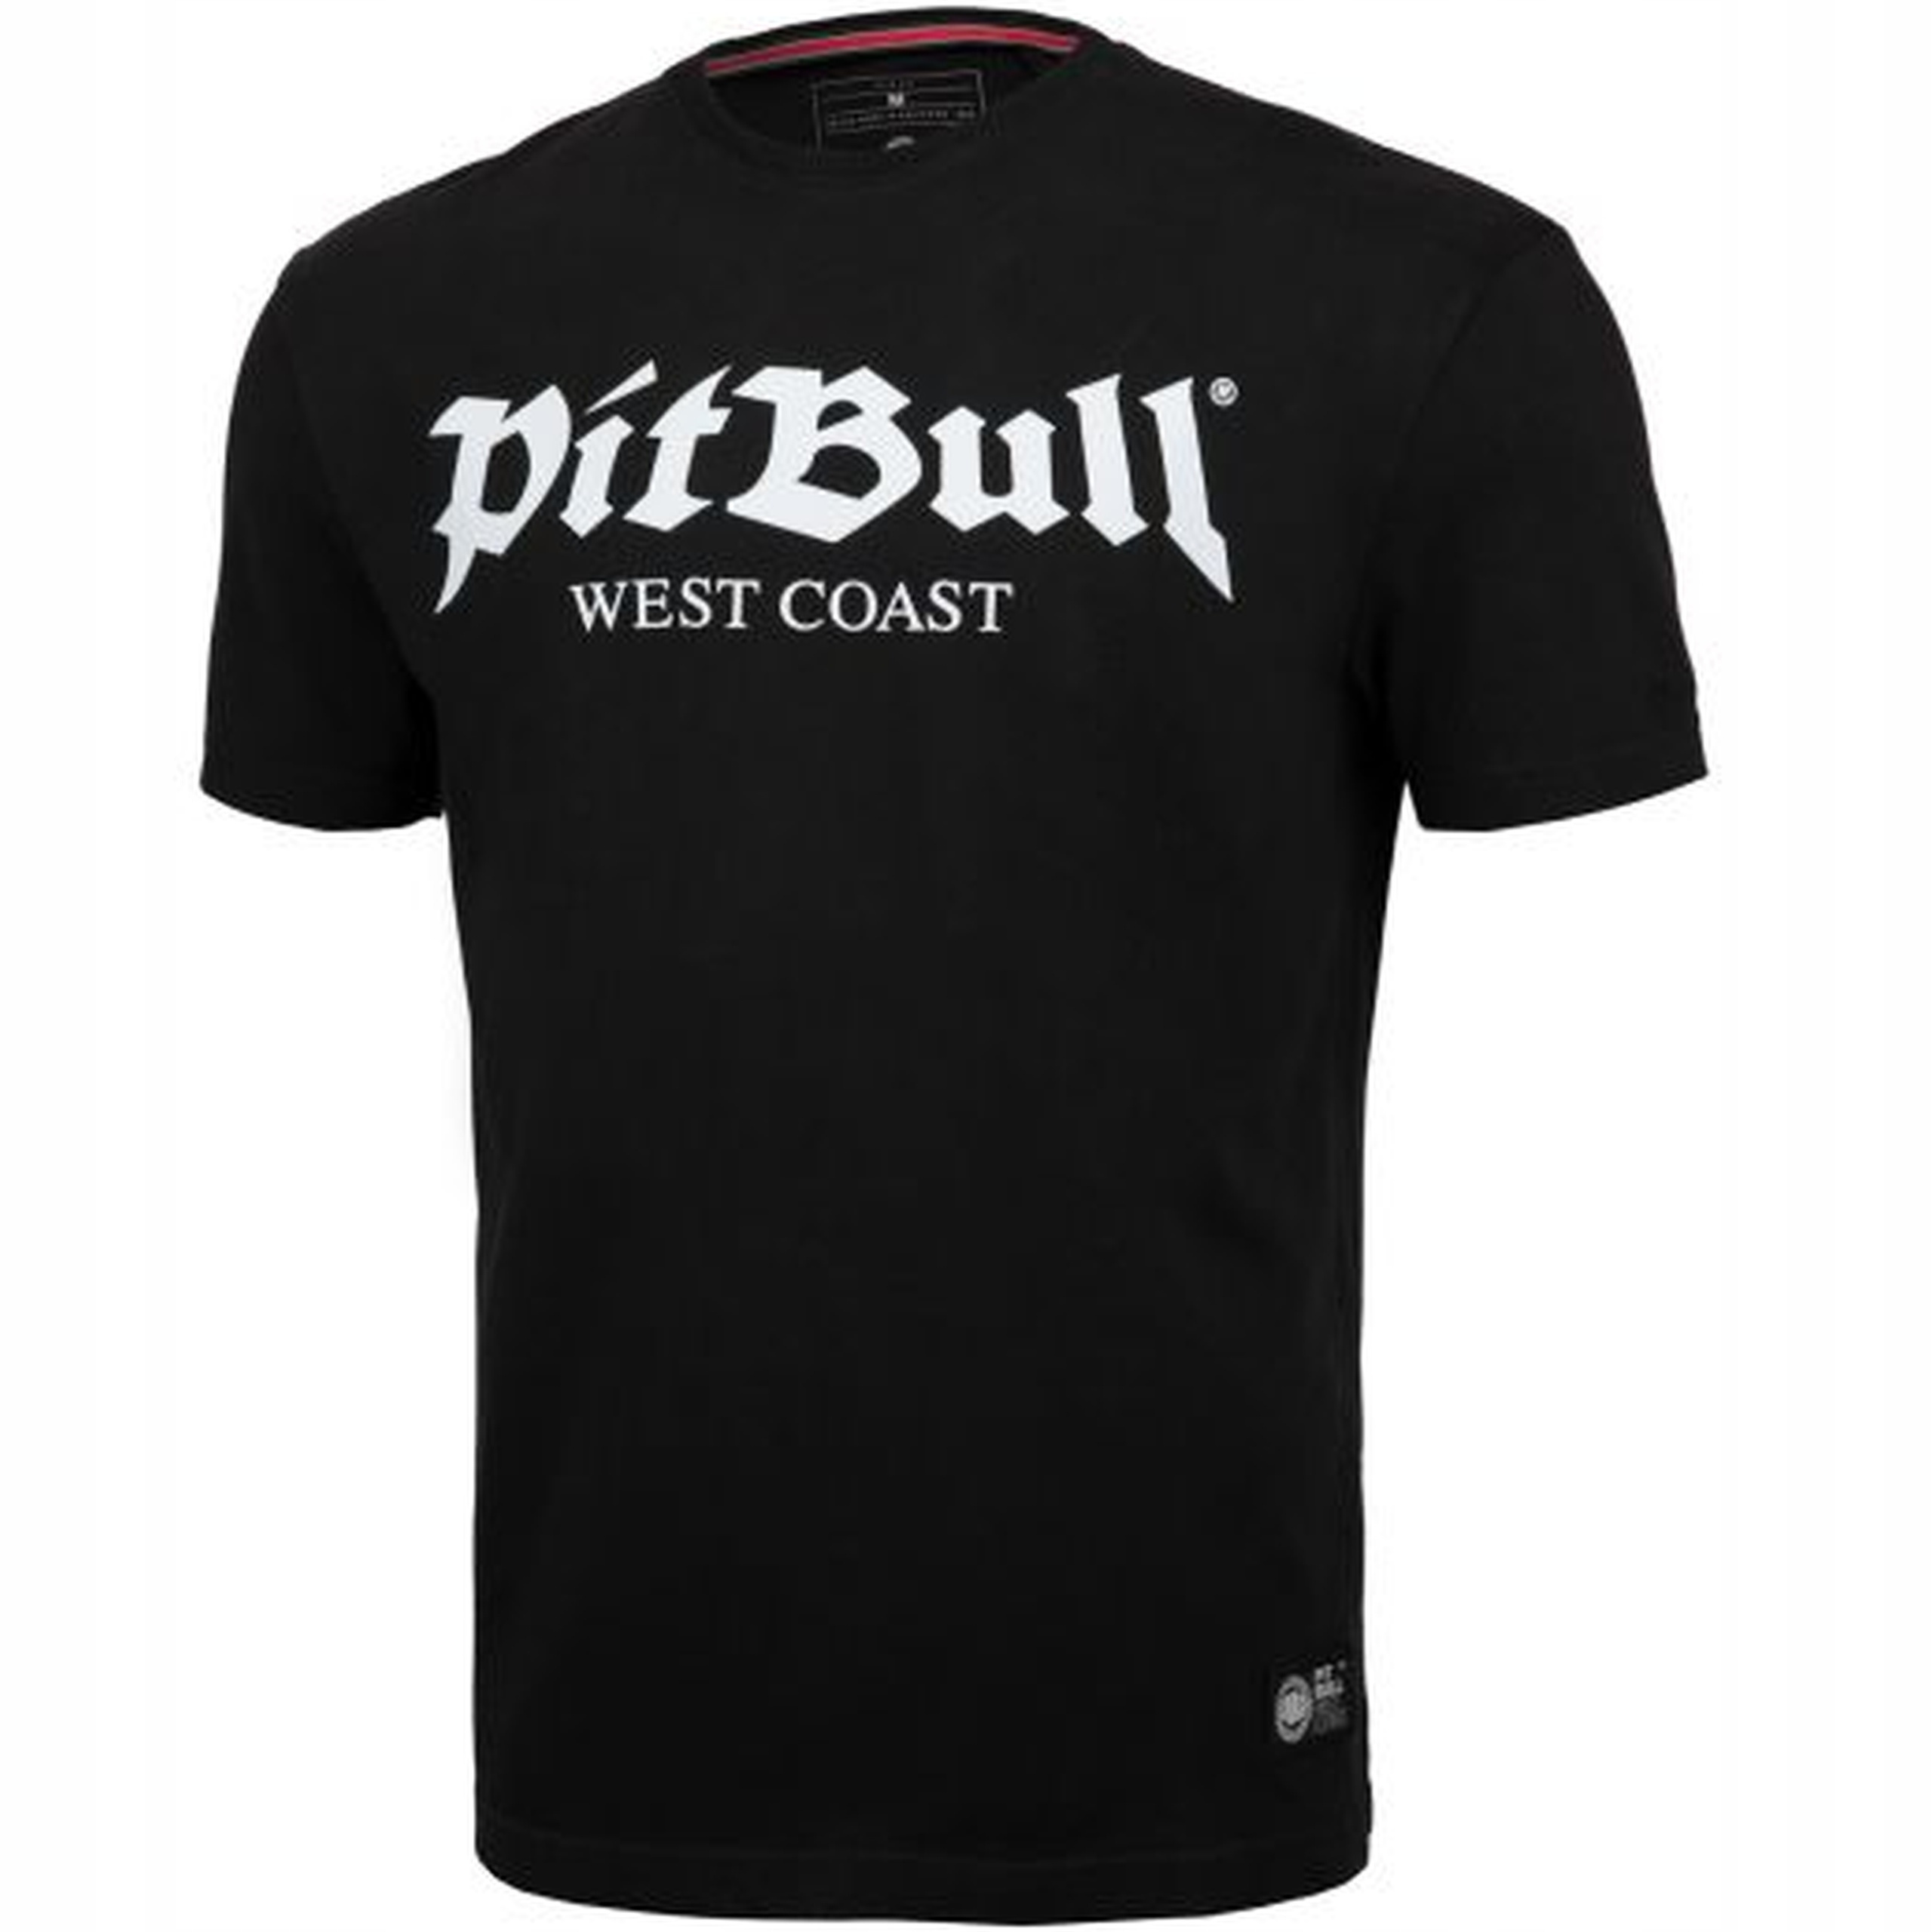 Pitbull одежда. Pitbull West Coast одежда. Футболка Pitbull. Pitbull Germany одежда. Pitbull одежда логотип.